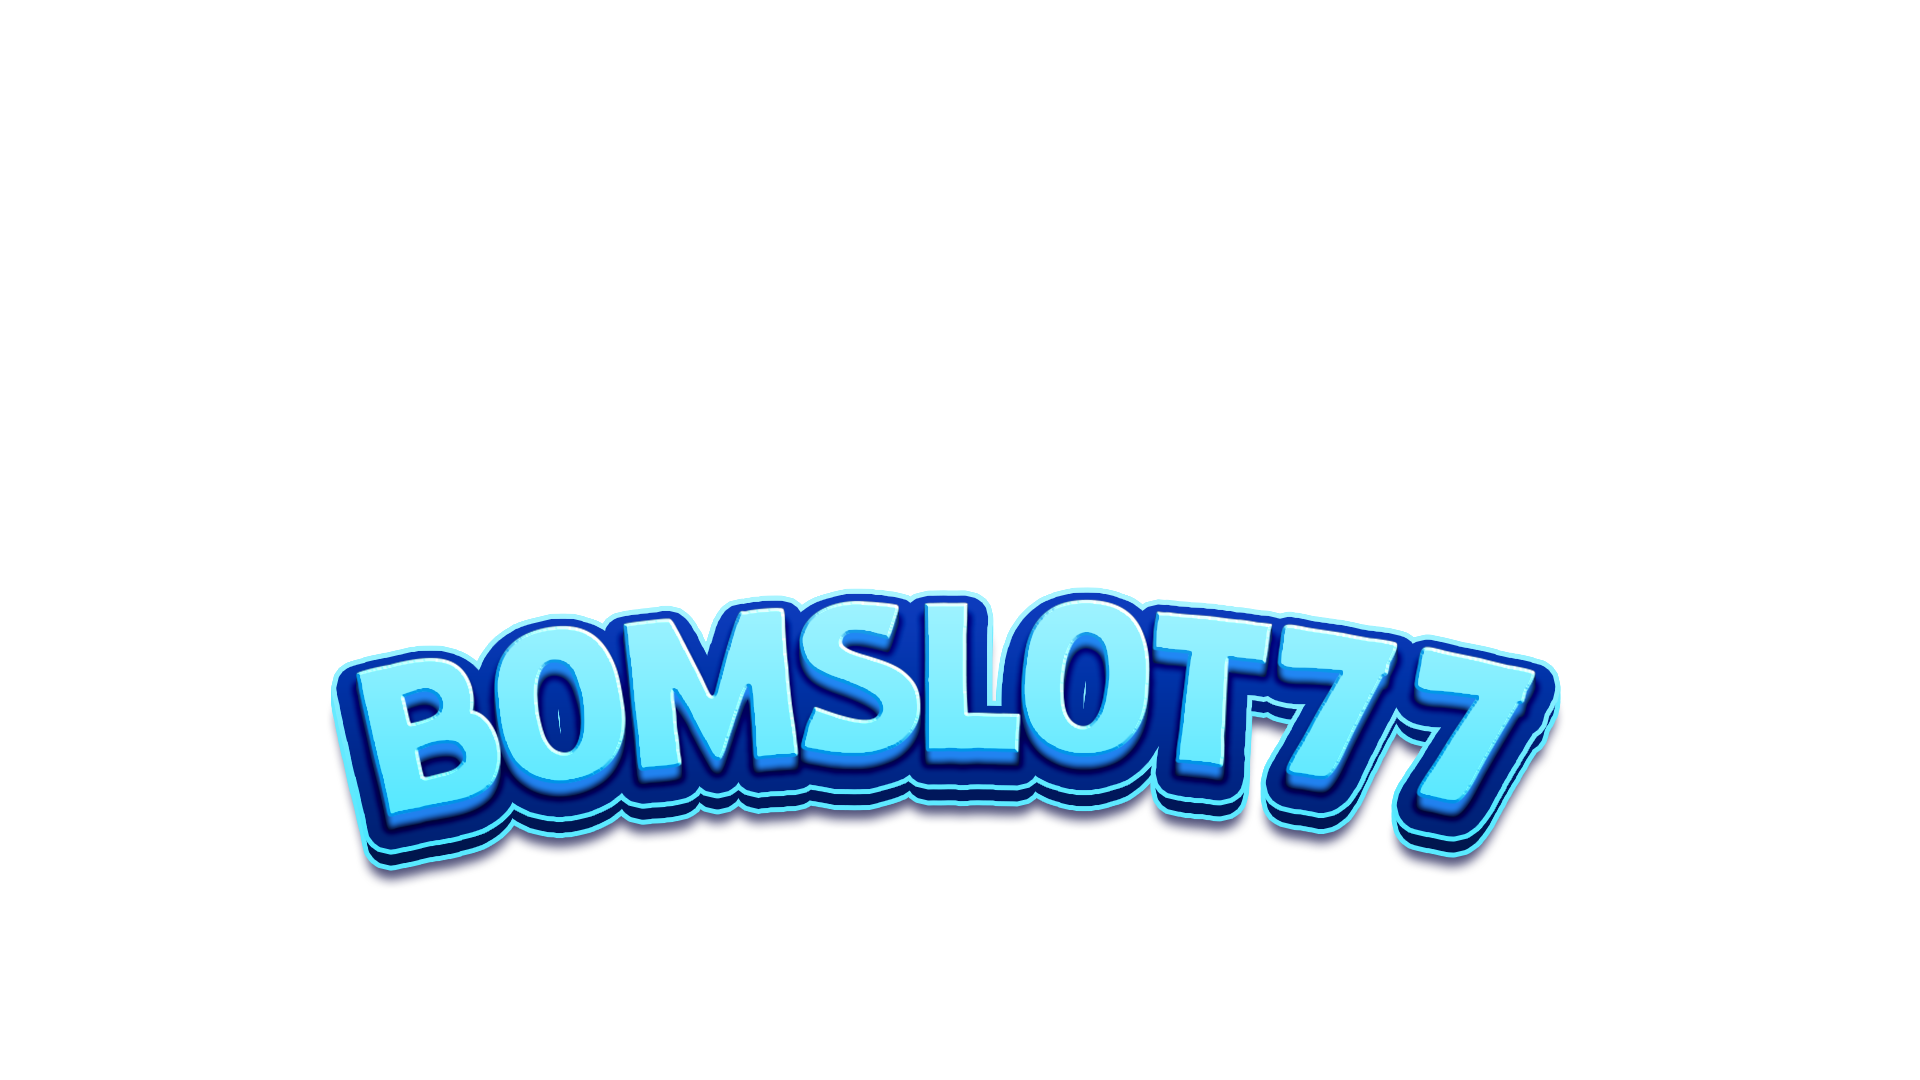 BOMSLOT77 | BOM SLOT 77